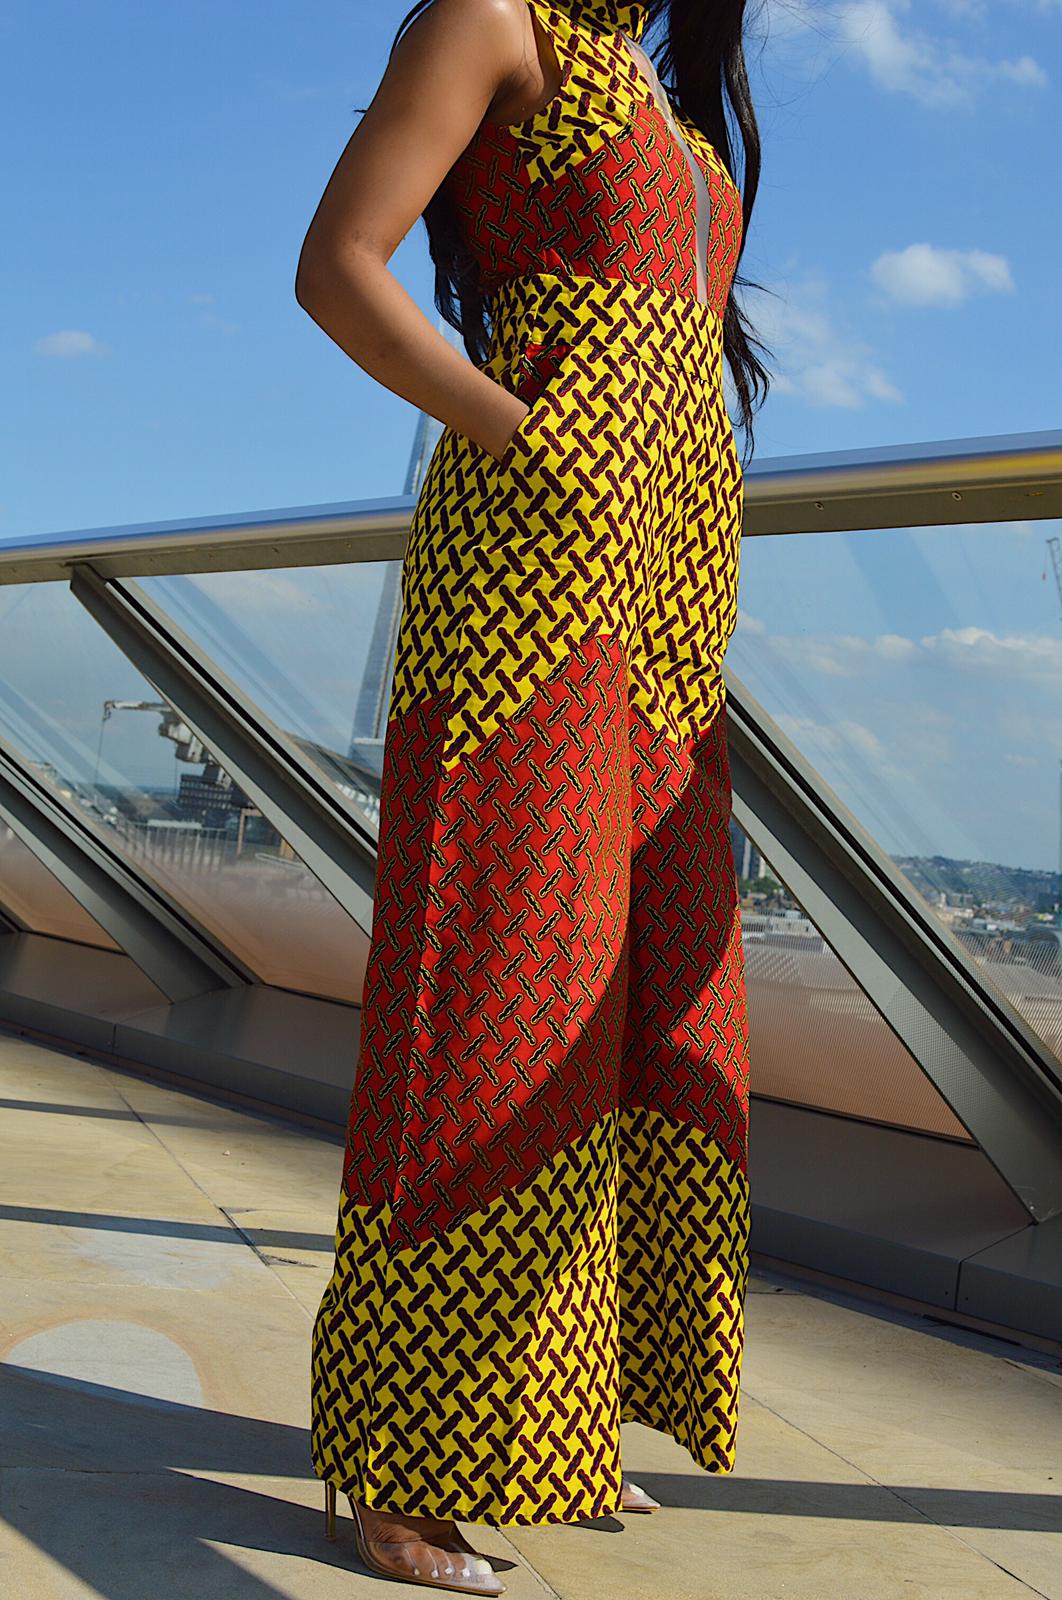 Monica African Print Ankara jumpsuit - Afrothrone